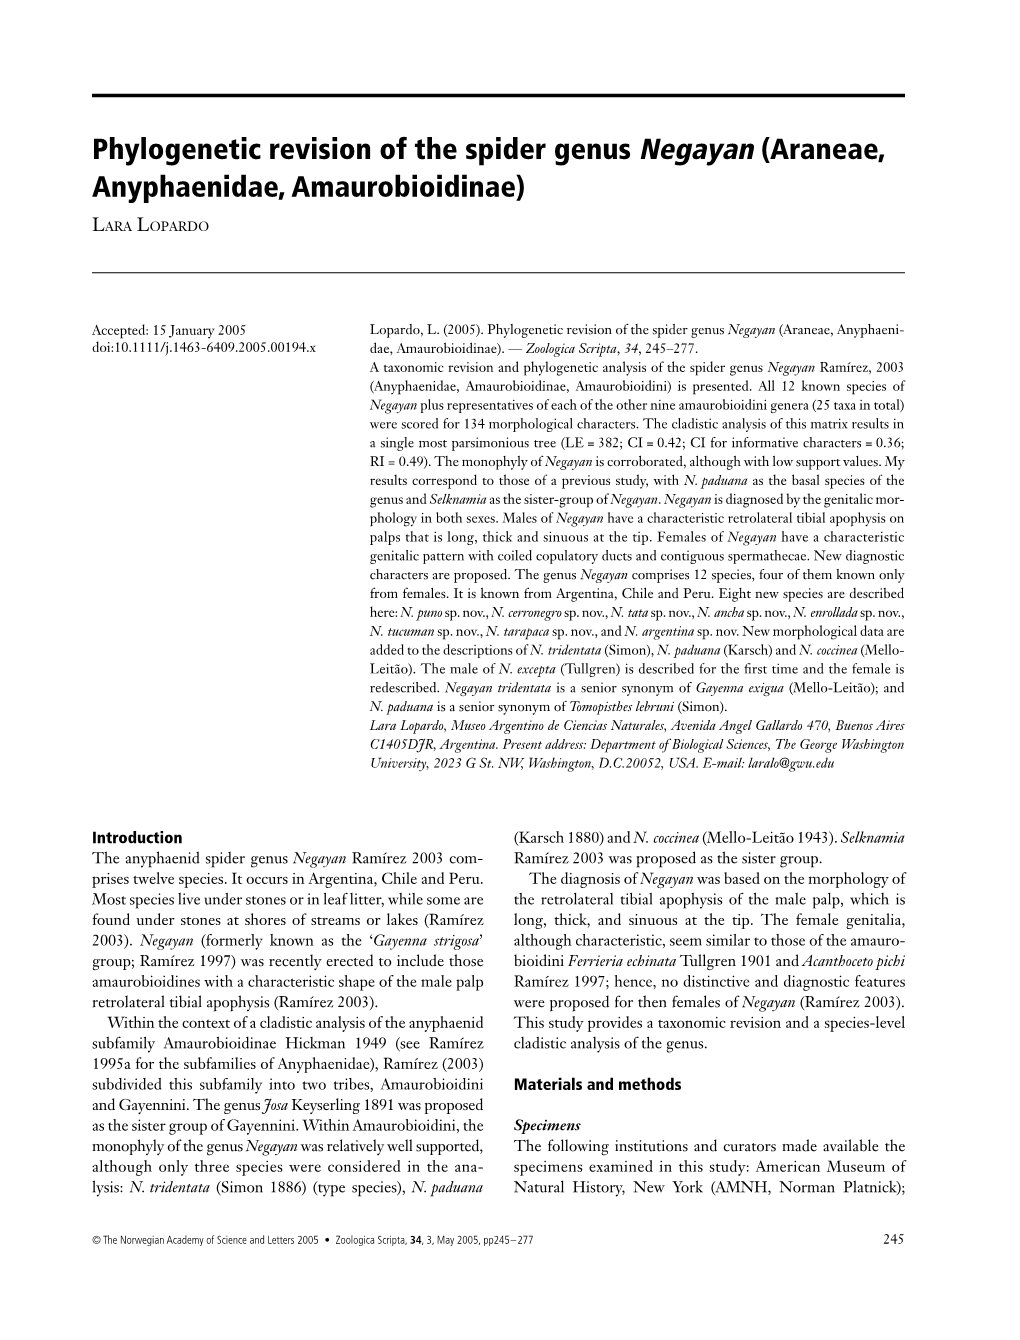 Phylogenetic Revision of the Spider Genus Negayan (Araneae, Anyphaeni- Doi:10.1111/J.1463-6409.2005.00194.X Dae, Amaurobioidinae)